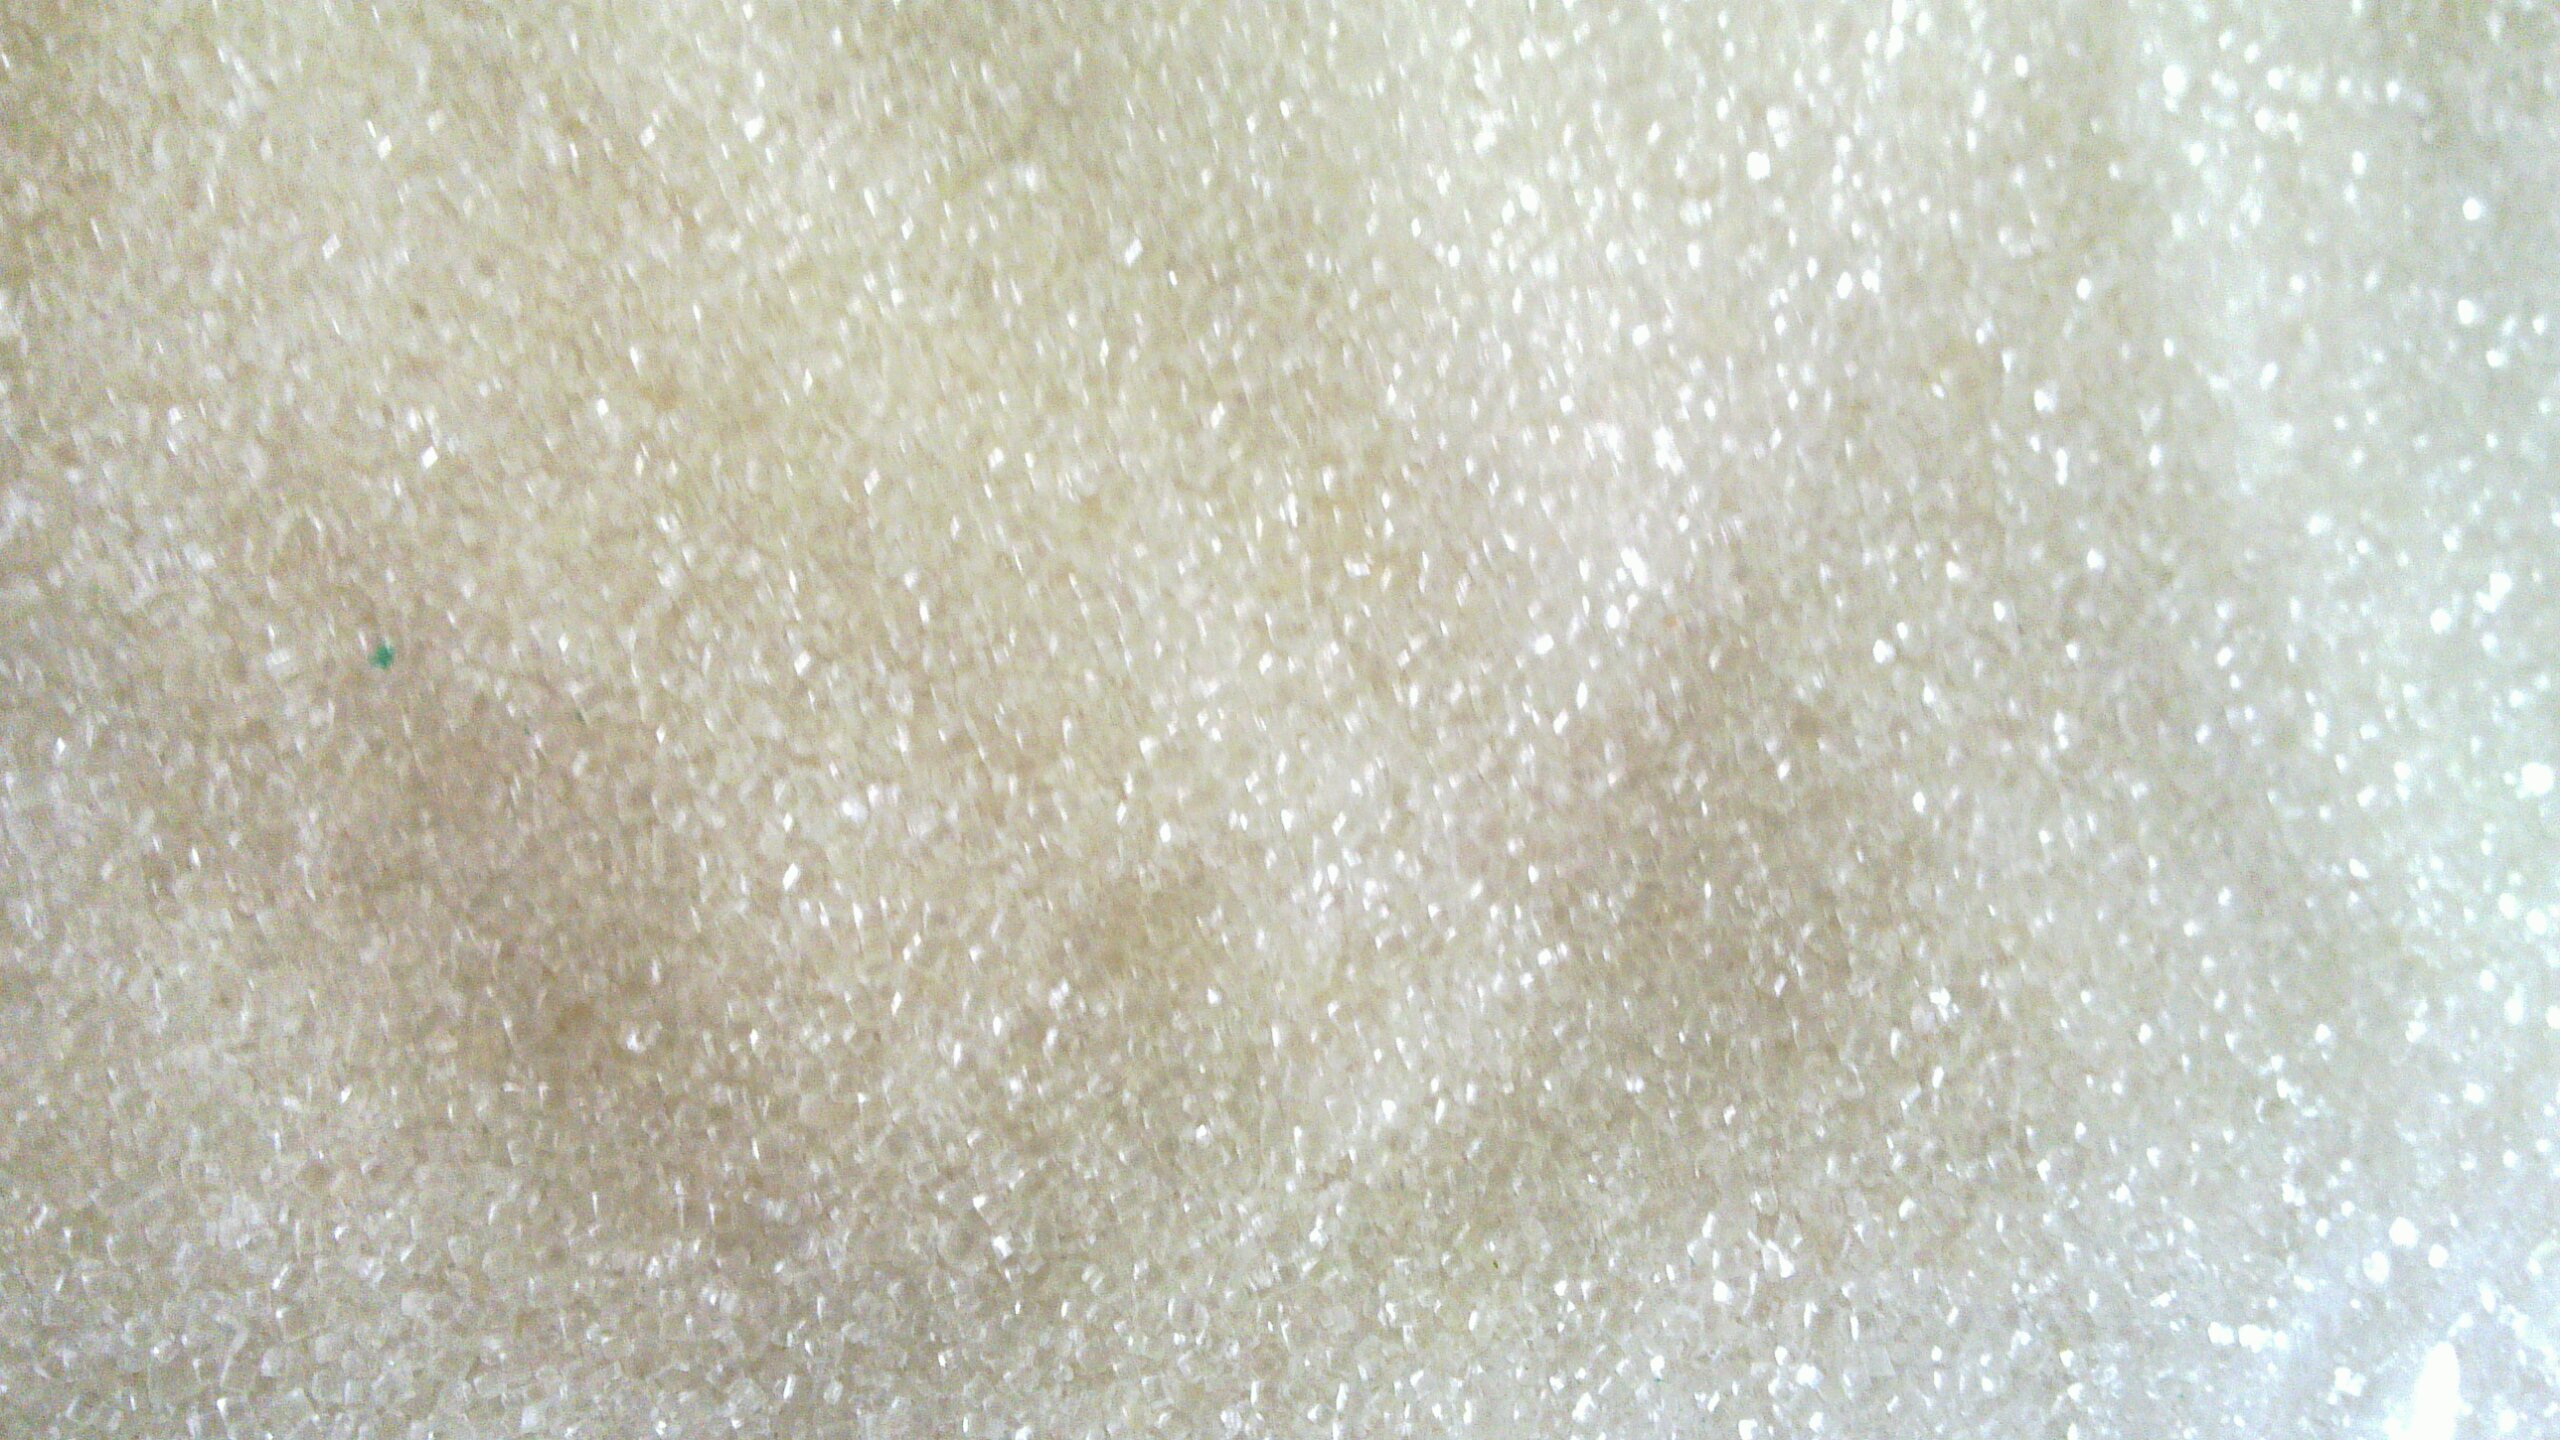 File:A view of Sugar.jpg